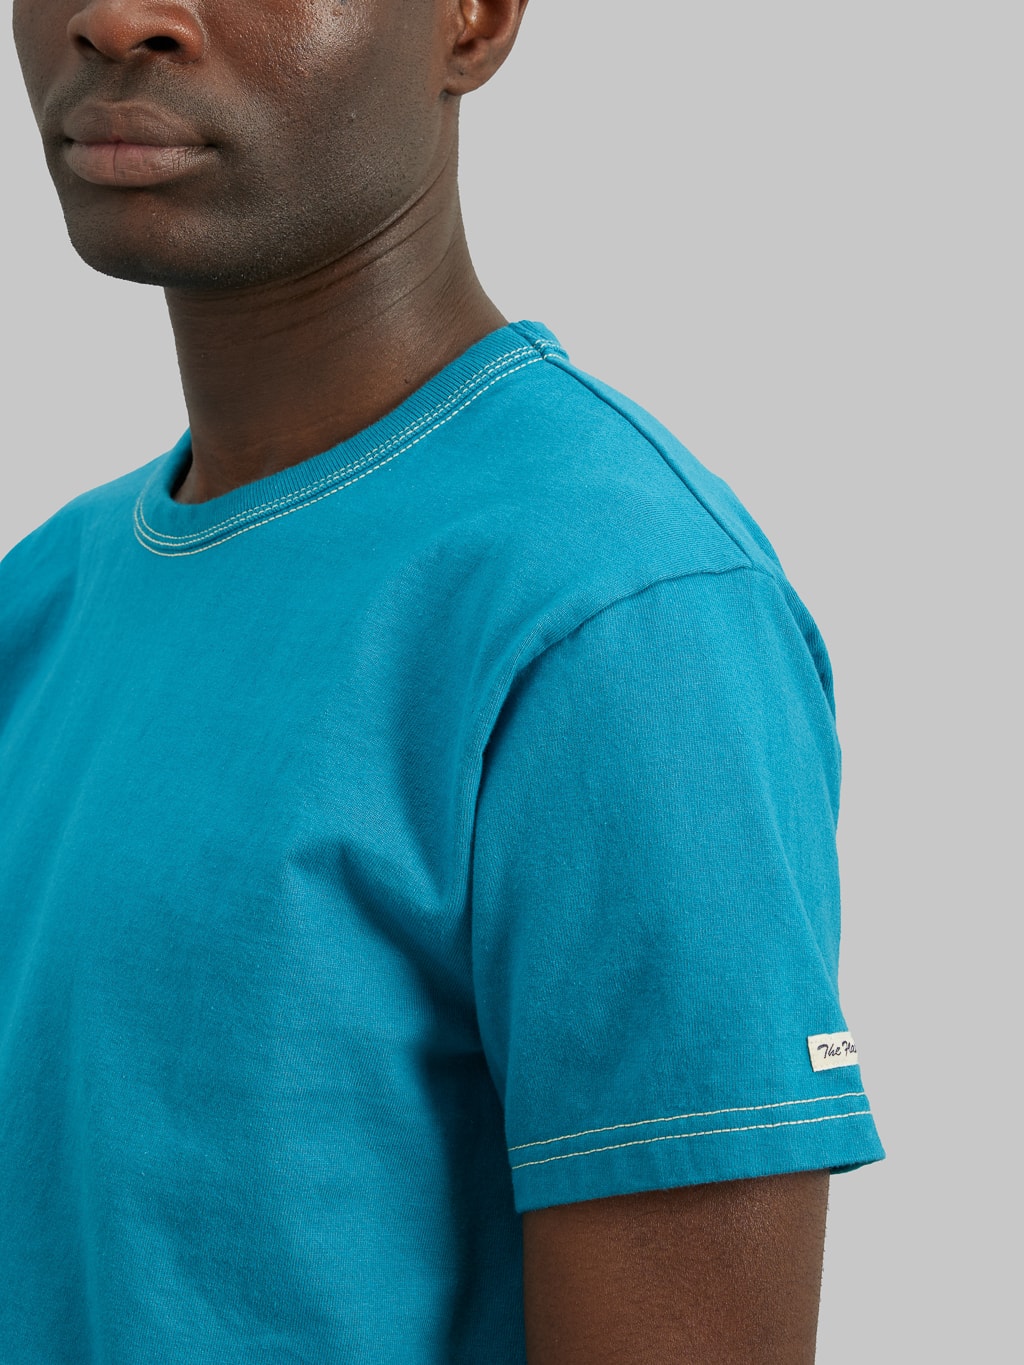 The Flat Head Plain Heavyweight TShirt turquoise sleeve